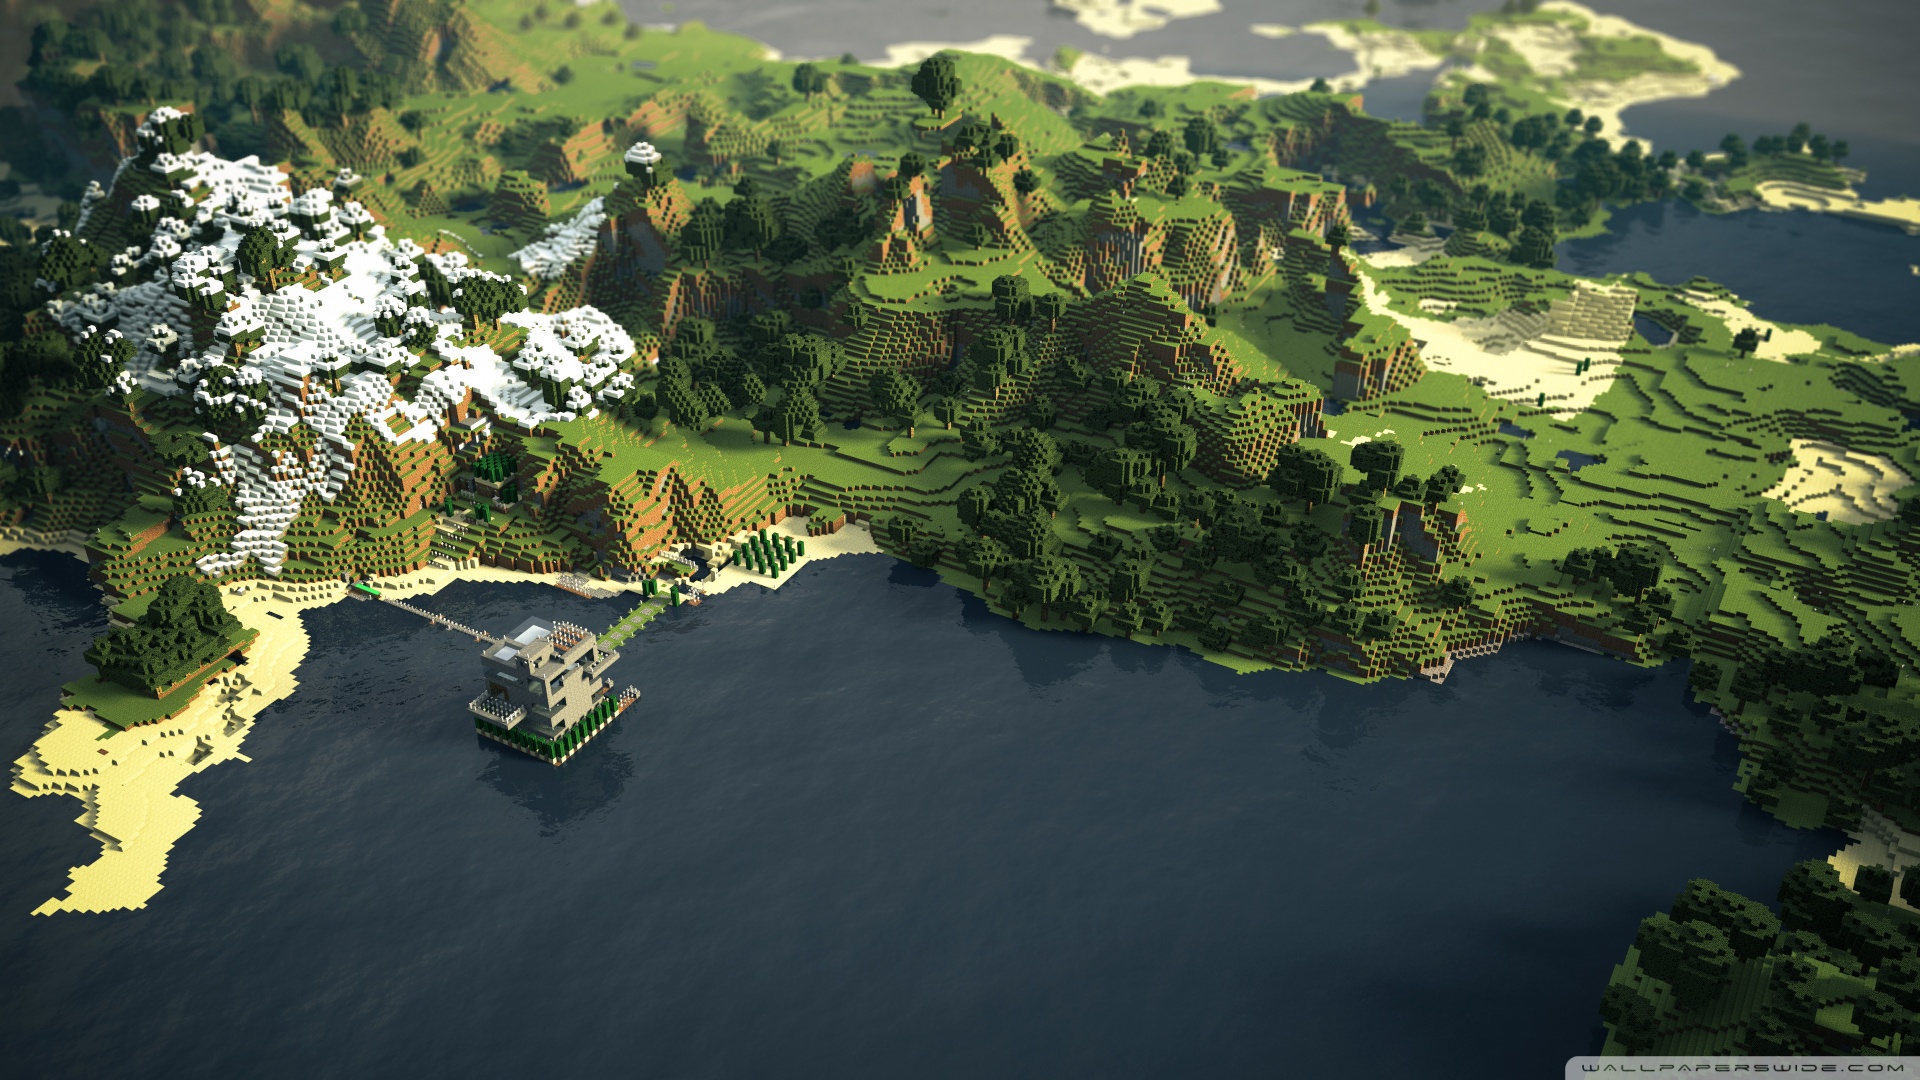 Minecraft Landscape Wallpaper